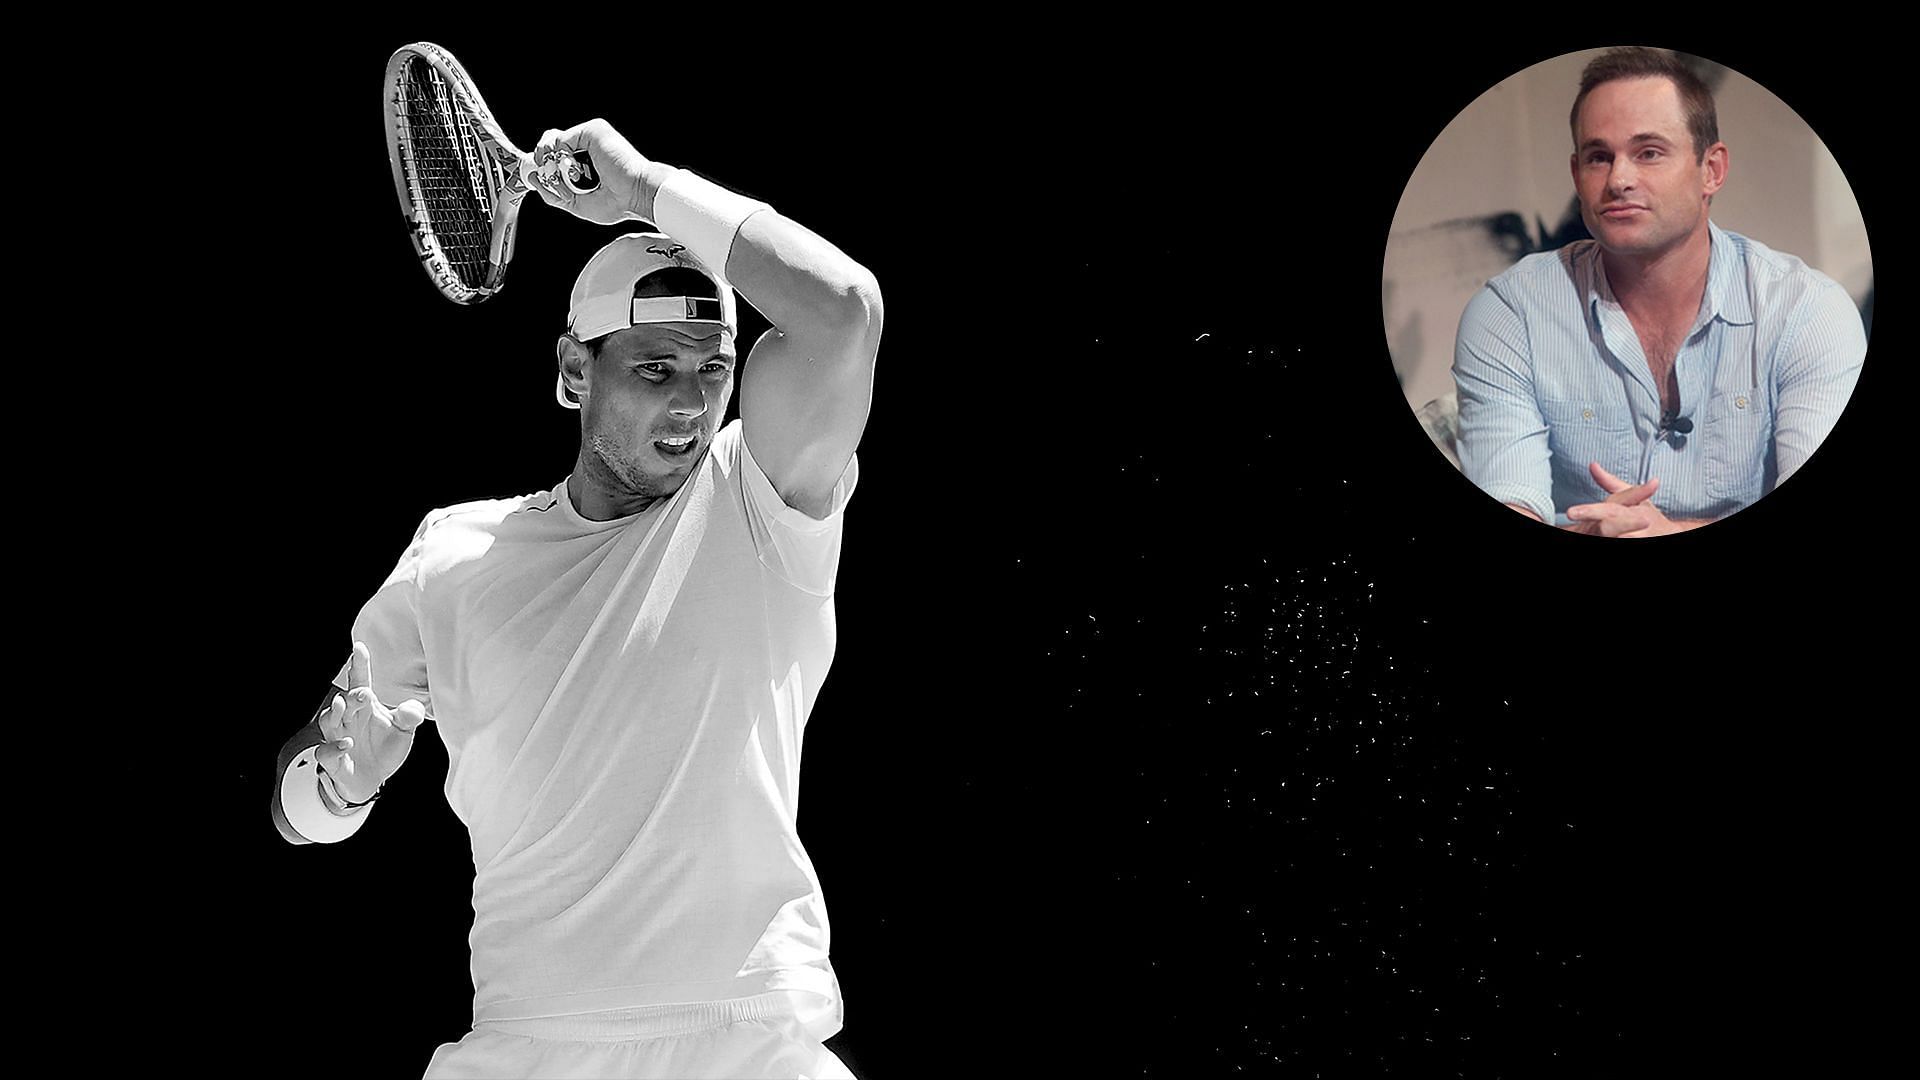 Andy Roddick questions Rafael Nadal